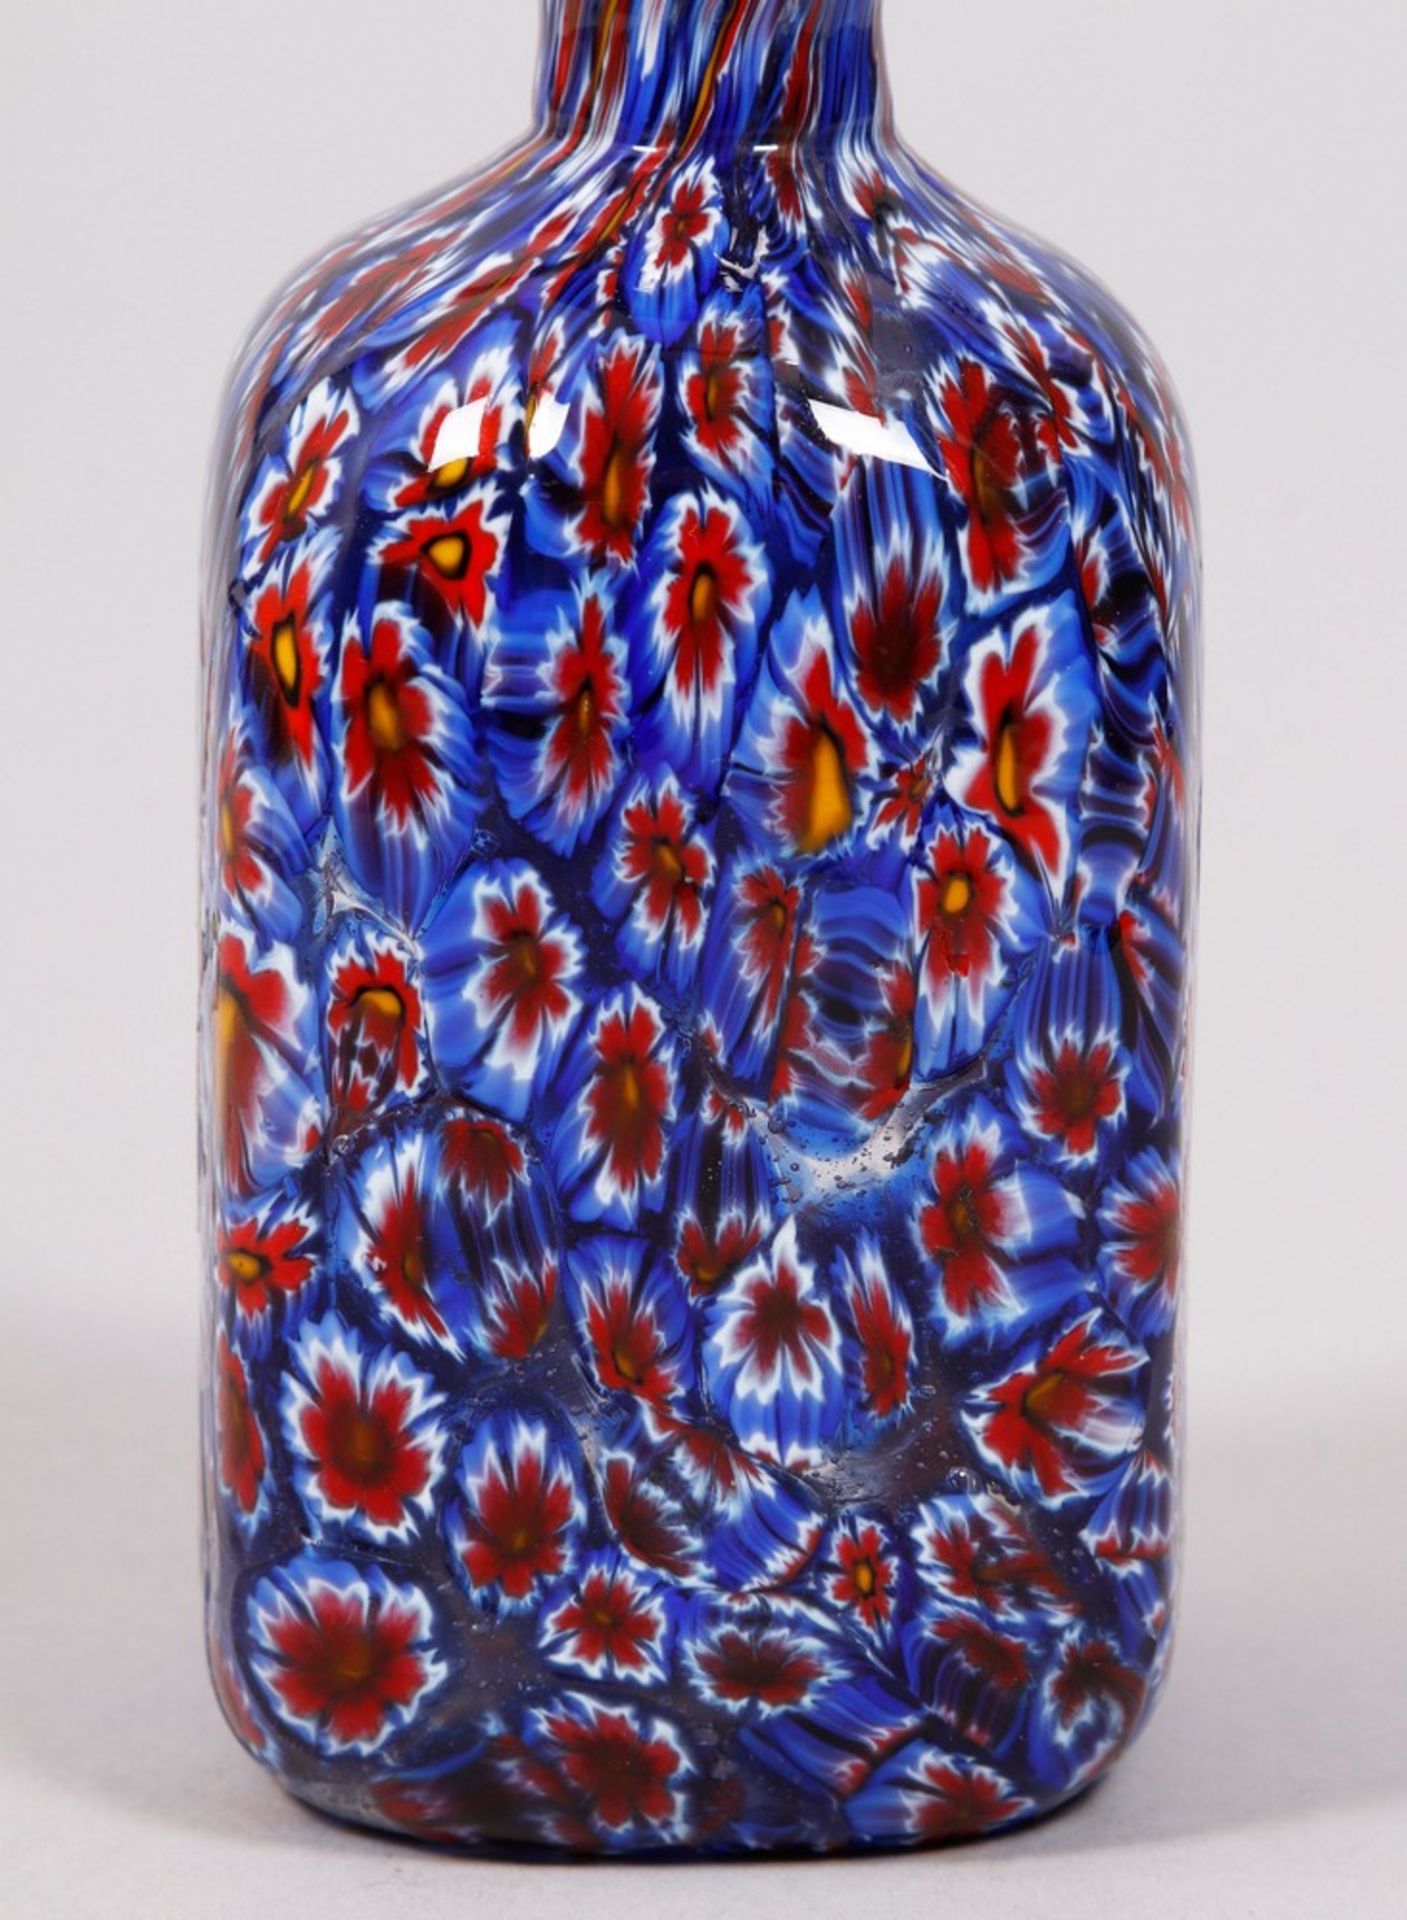 Small bottle vase, probably Vetreria Campanella, Murano, Italy, mid-20th C. - Image 3 of 4